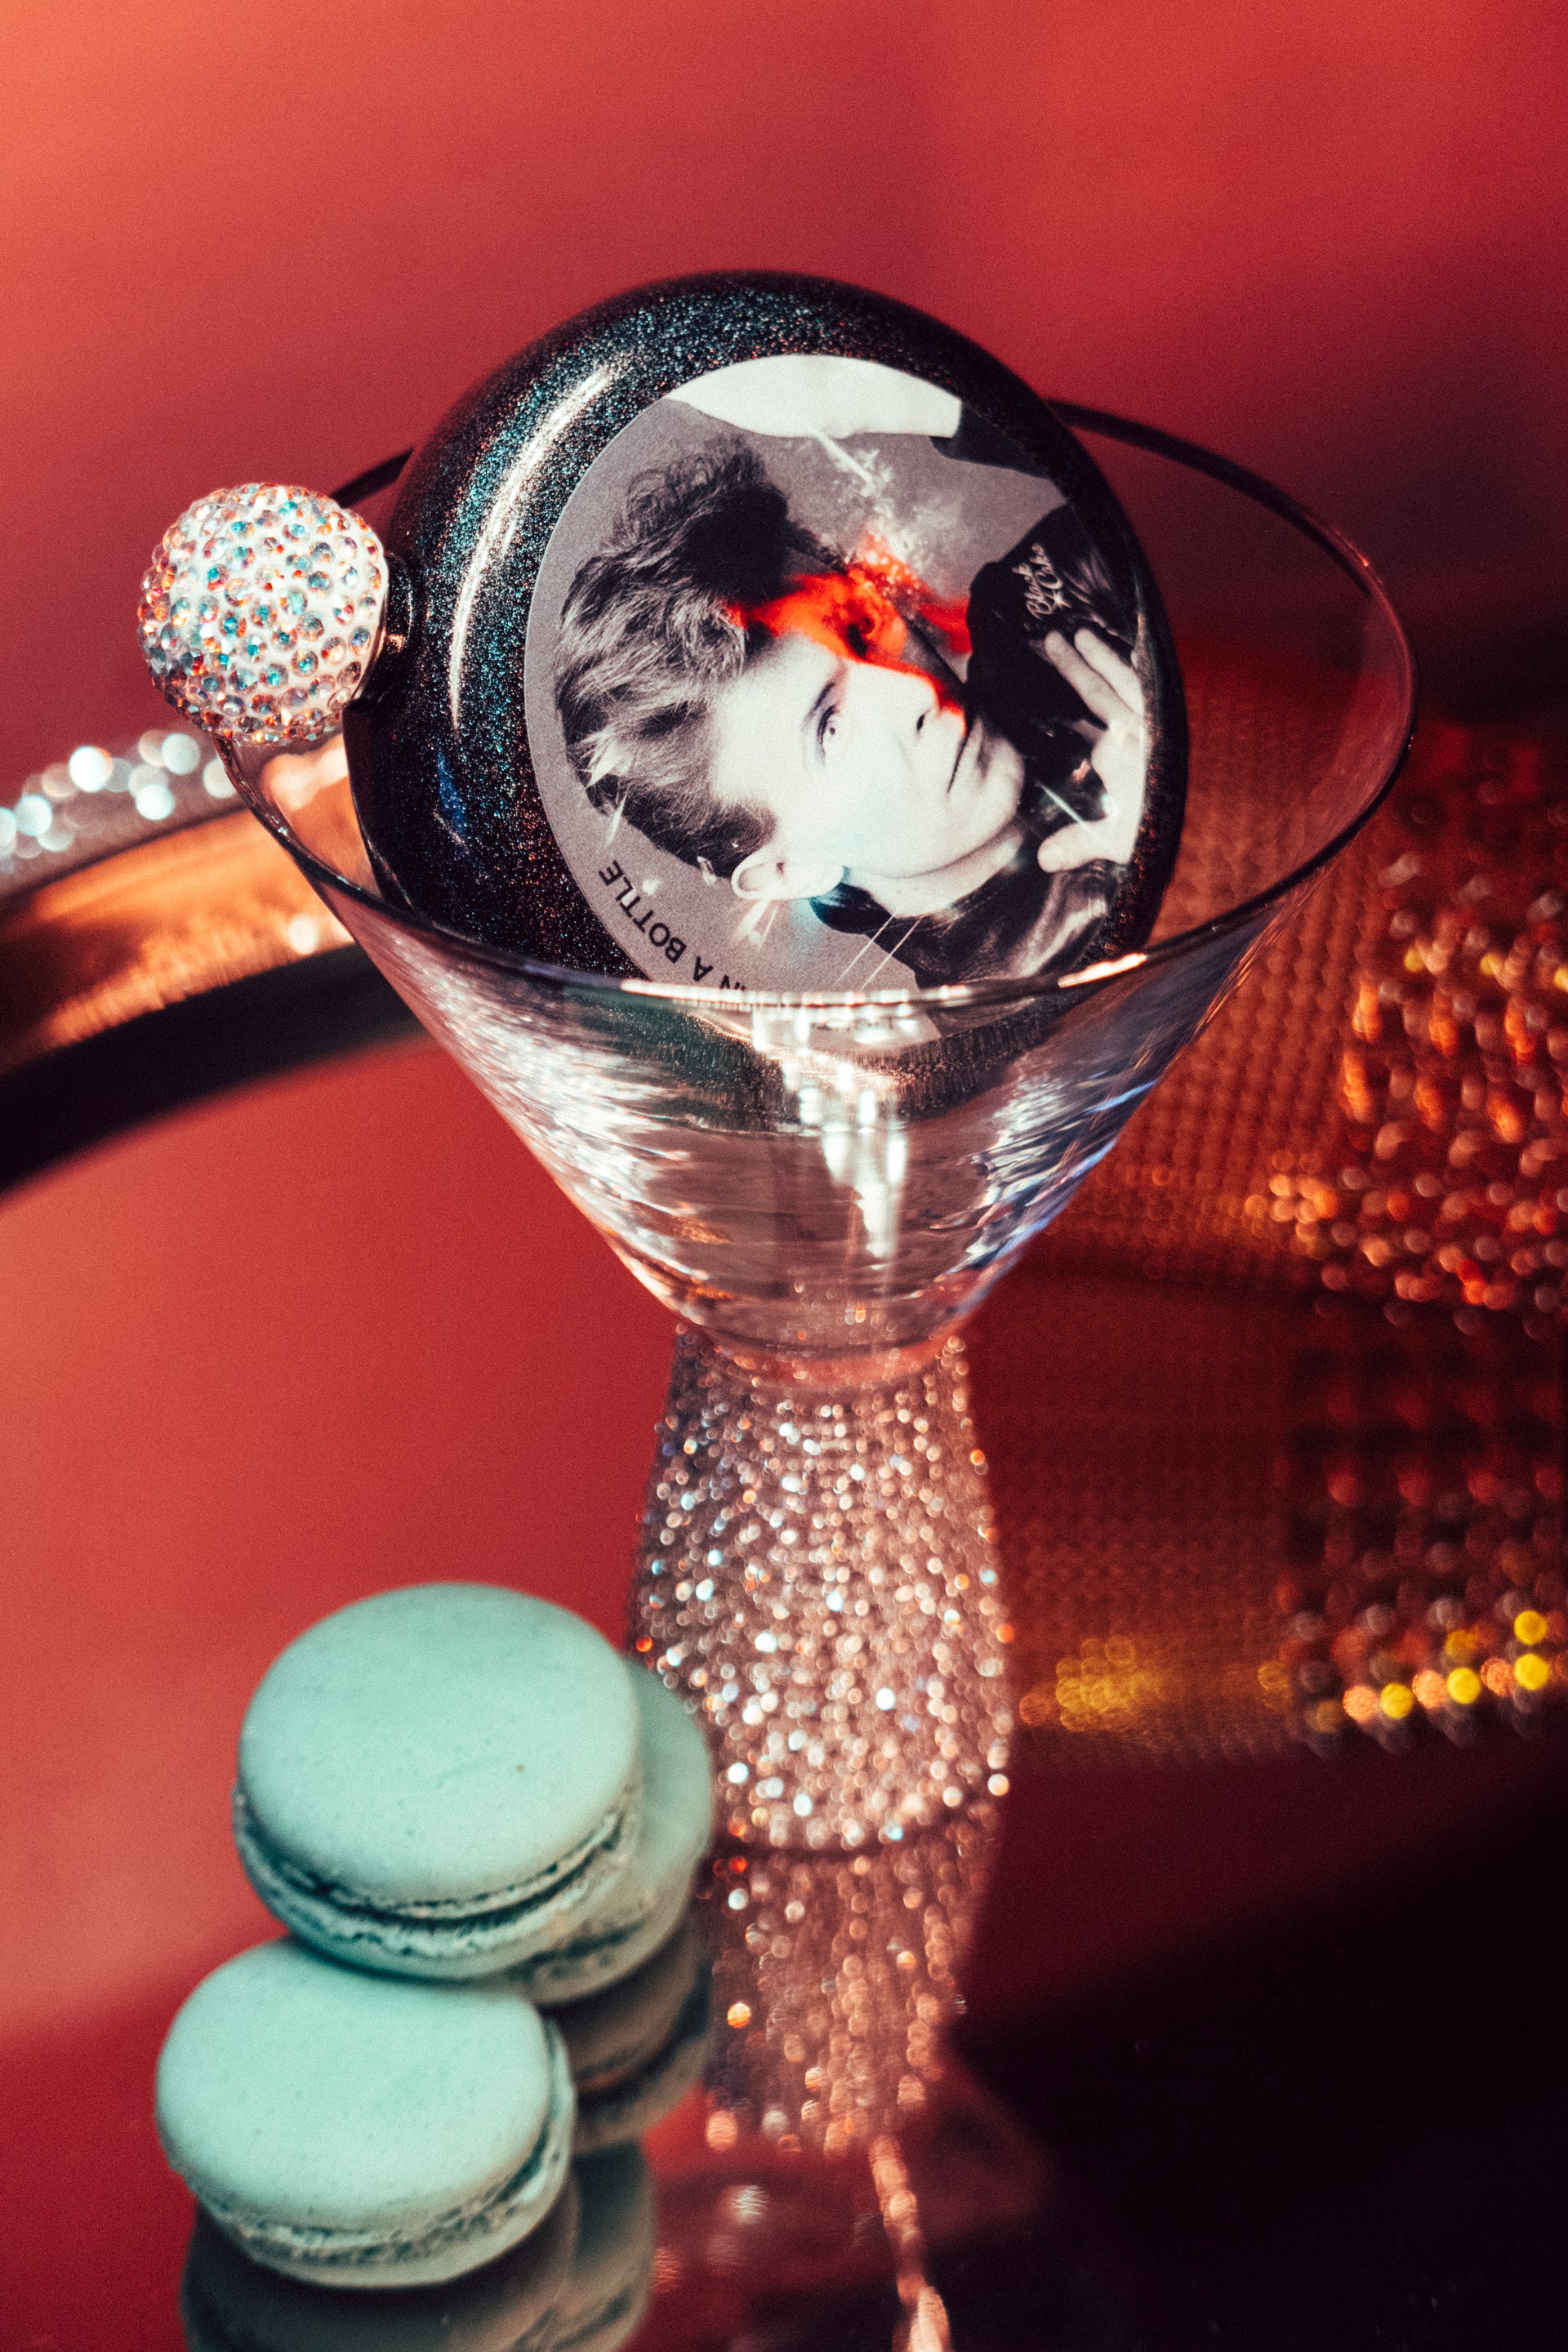 Limited Edition David Bowie Tribute Glitter Iridescent Spirit Flask